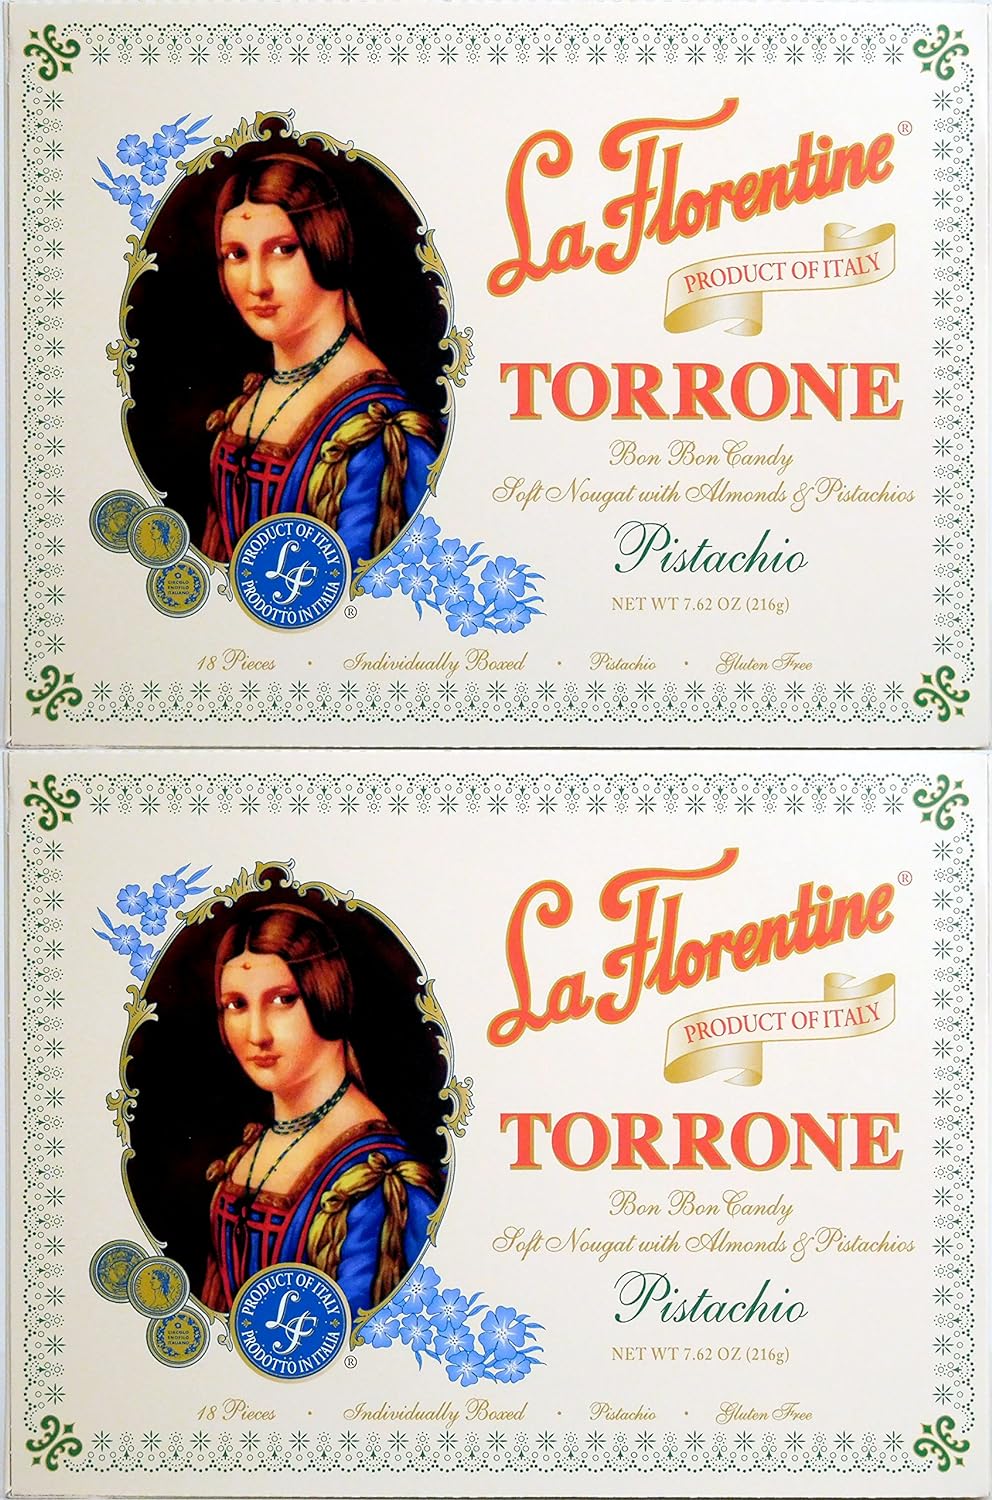 La Florentine Soft Torrone with Almonds & Pistachios